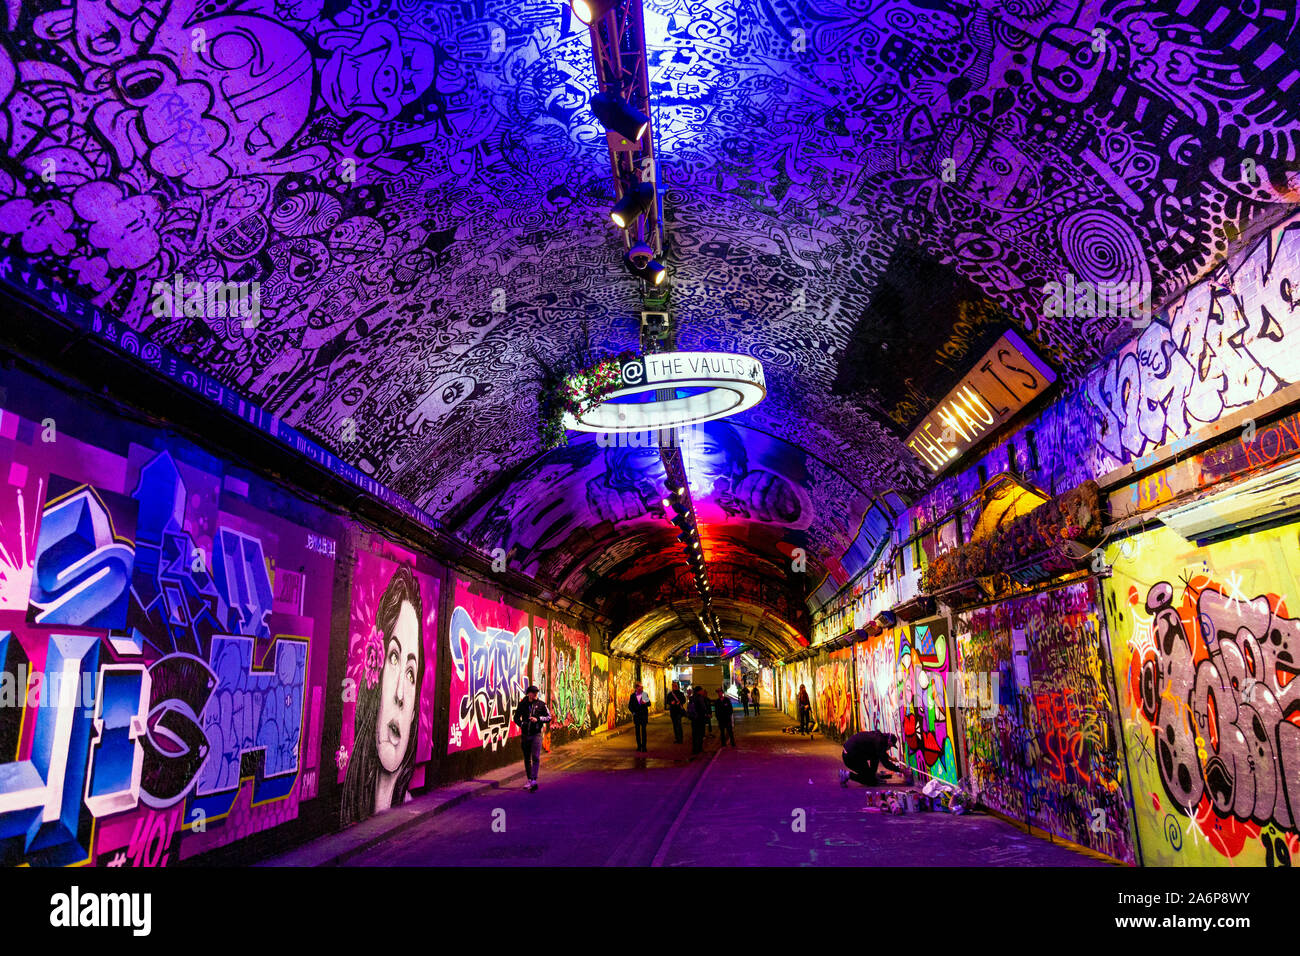 Colourful artwork and murals inside the Leake Street graffiti tunnel, London, UK Stock Photo